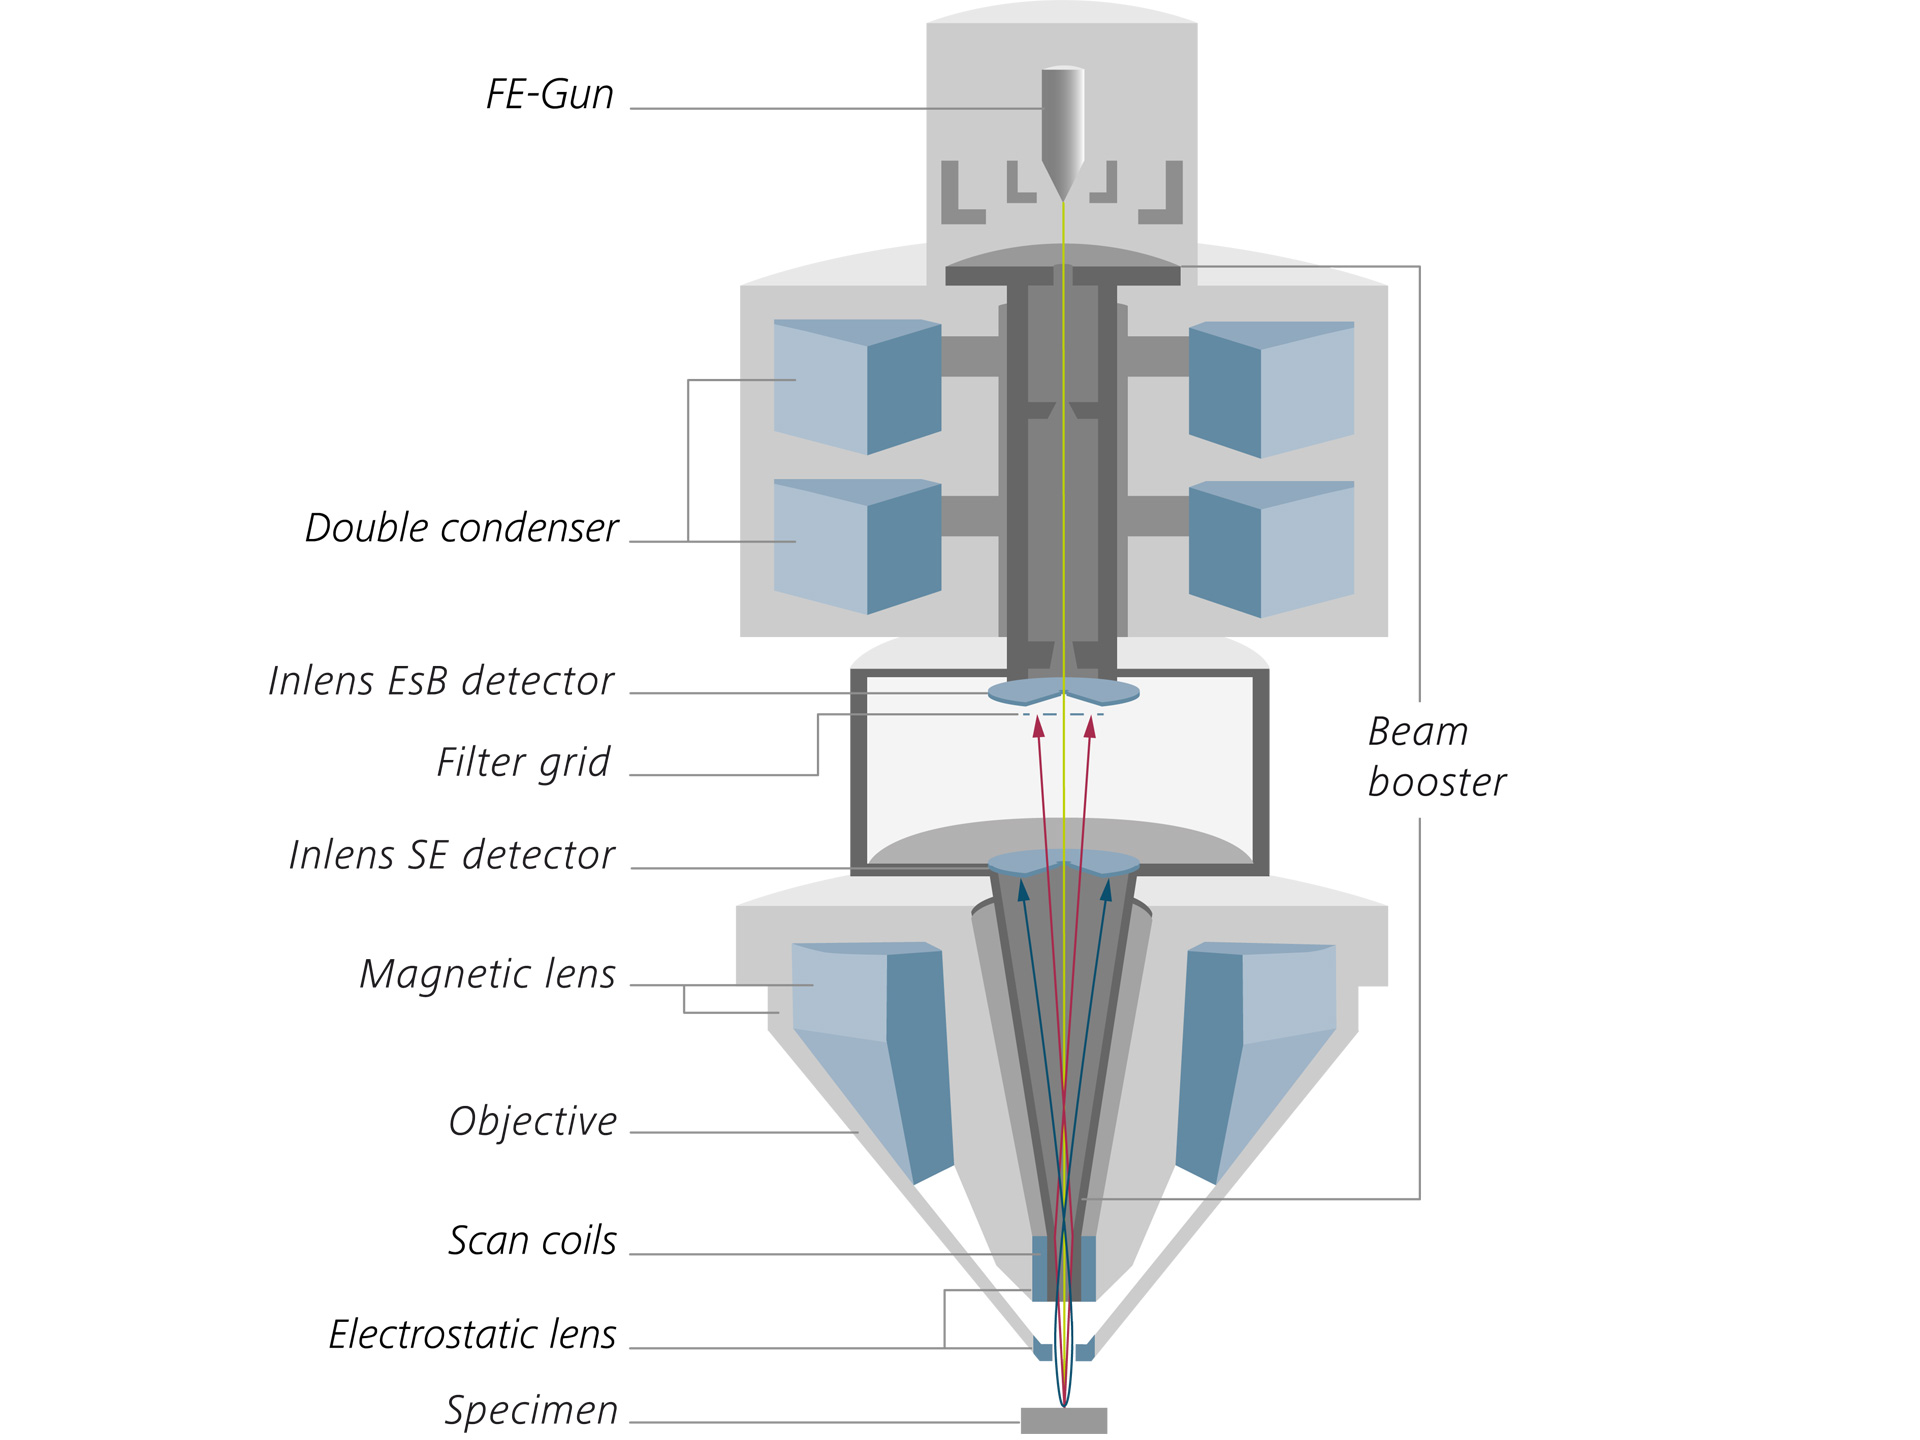 Gemini技术。Gemini 2电子光学镜筒截面示意图，包含一个双聚光镜、电子束推进器、Inlens探测器和Gemini物镜。 